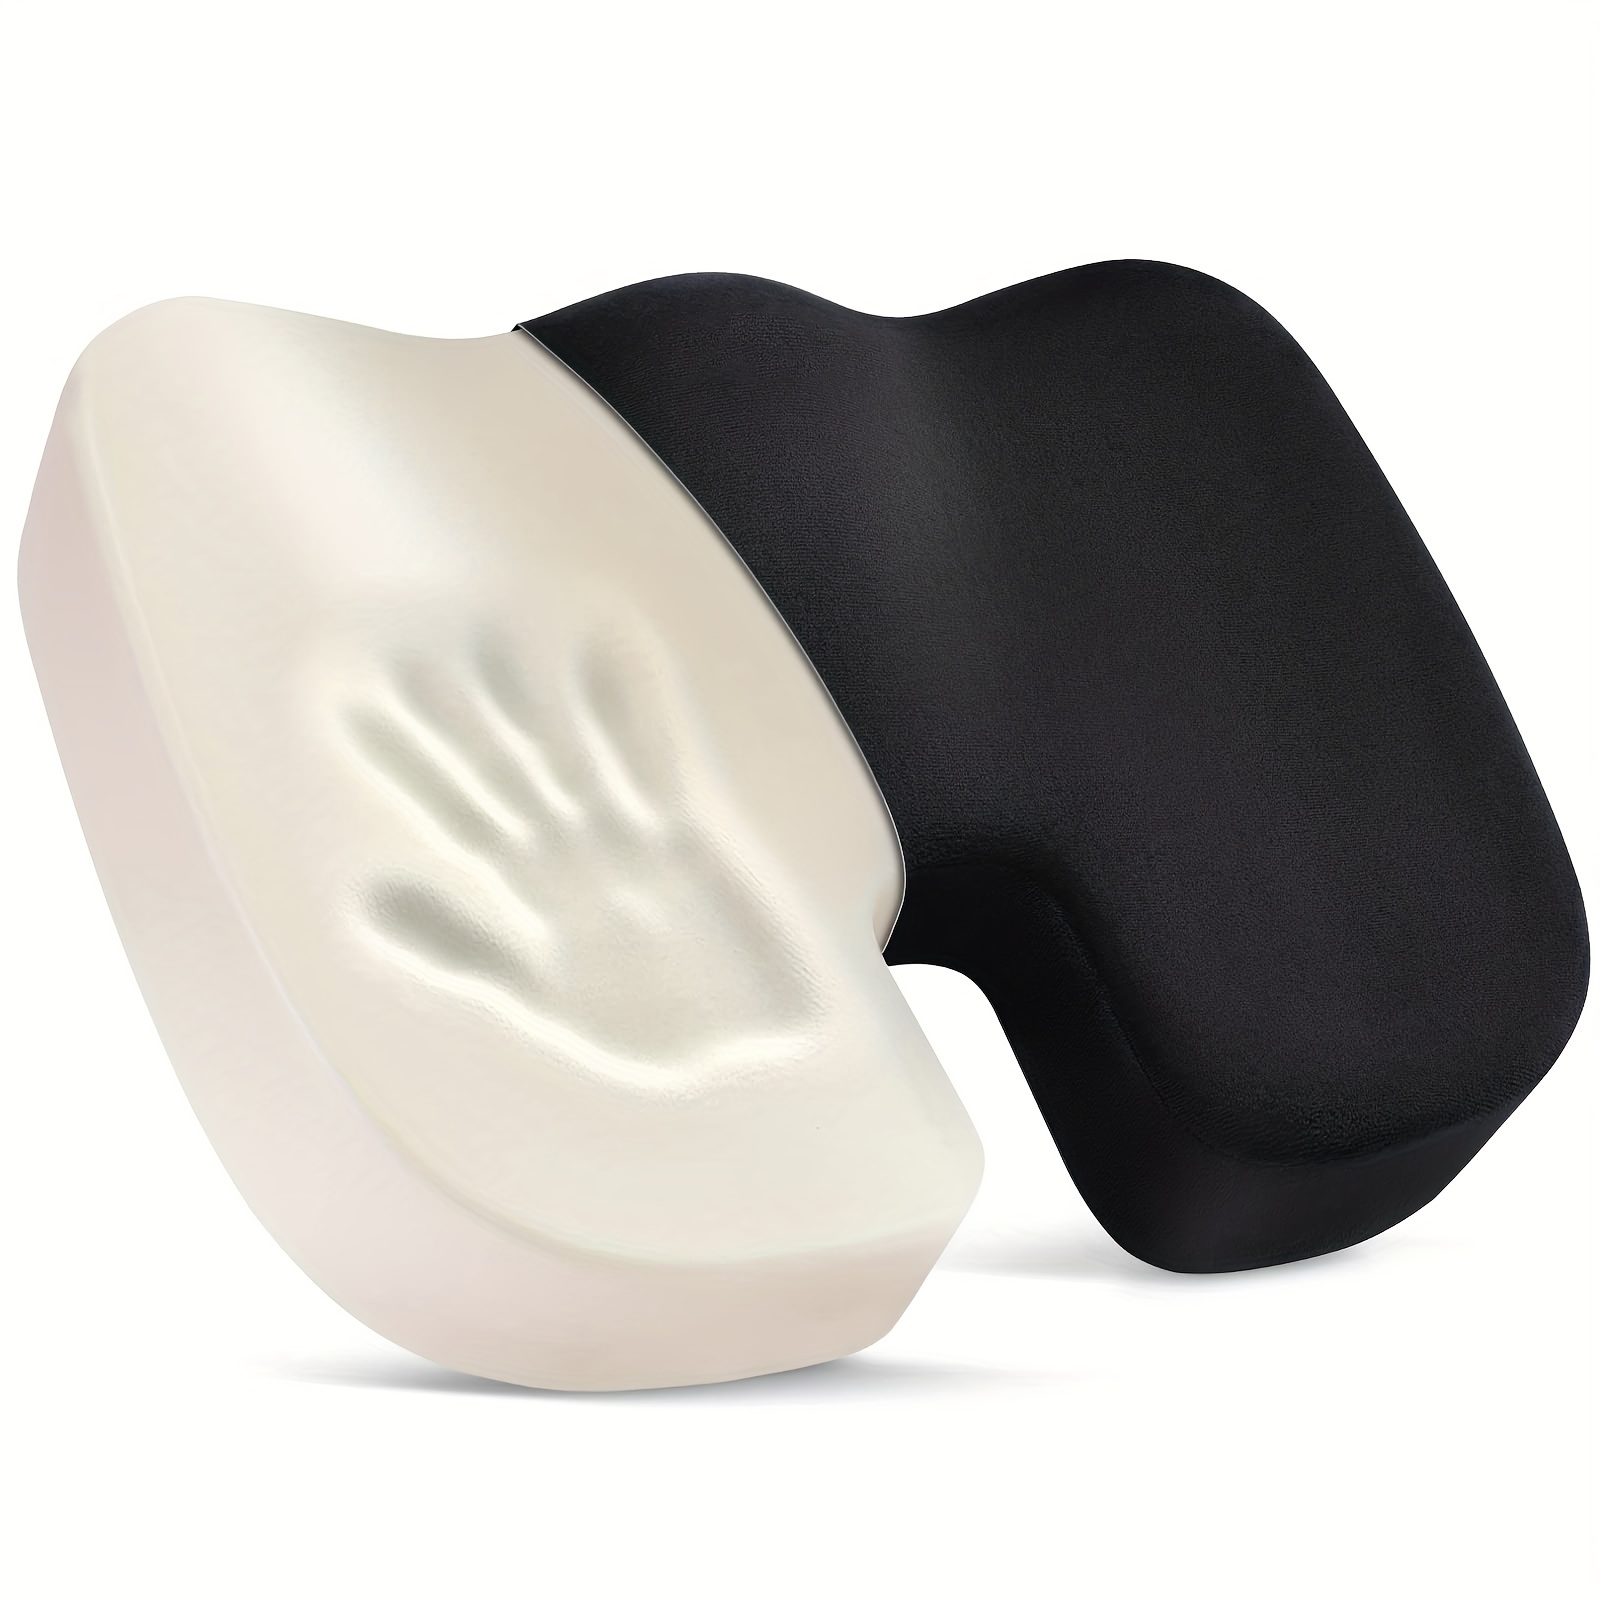 Memory Foam Seat Cushion for Tailbone Pain Relief 